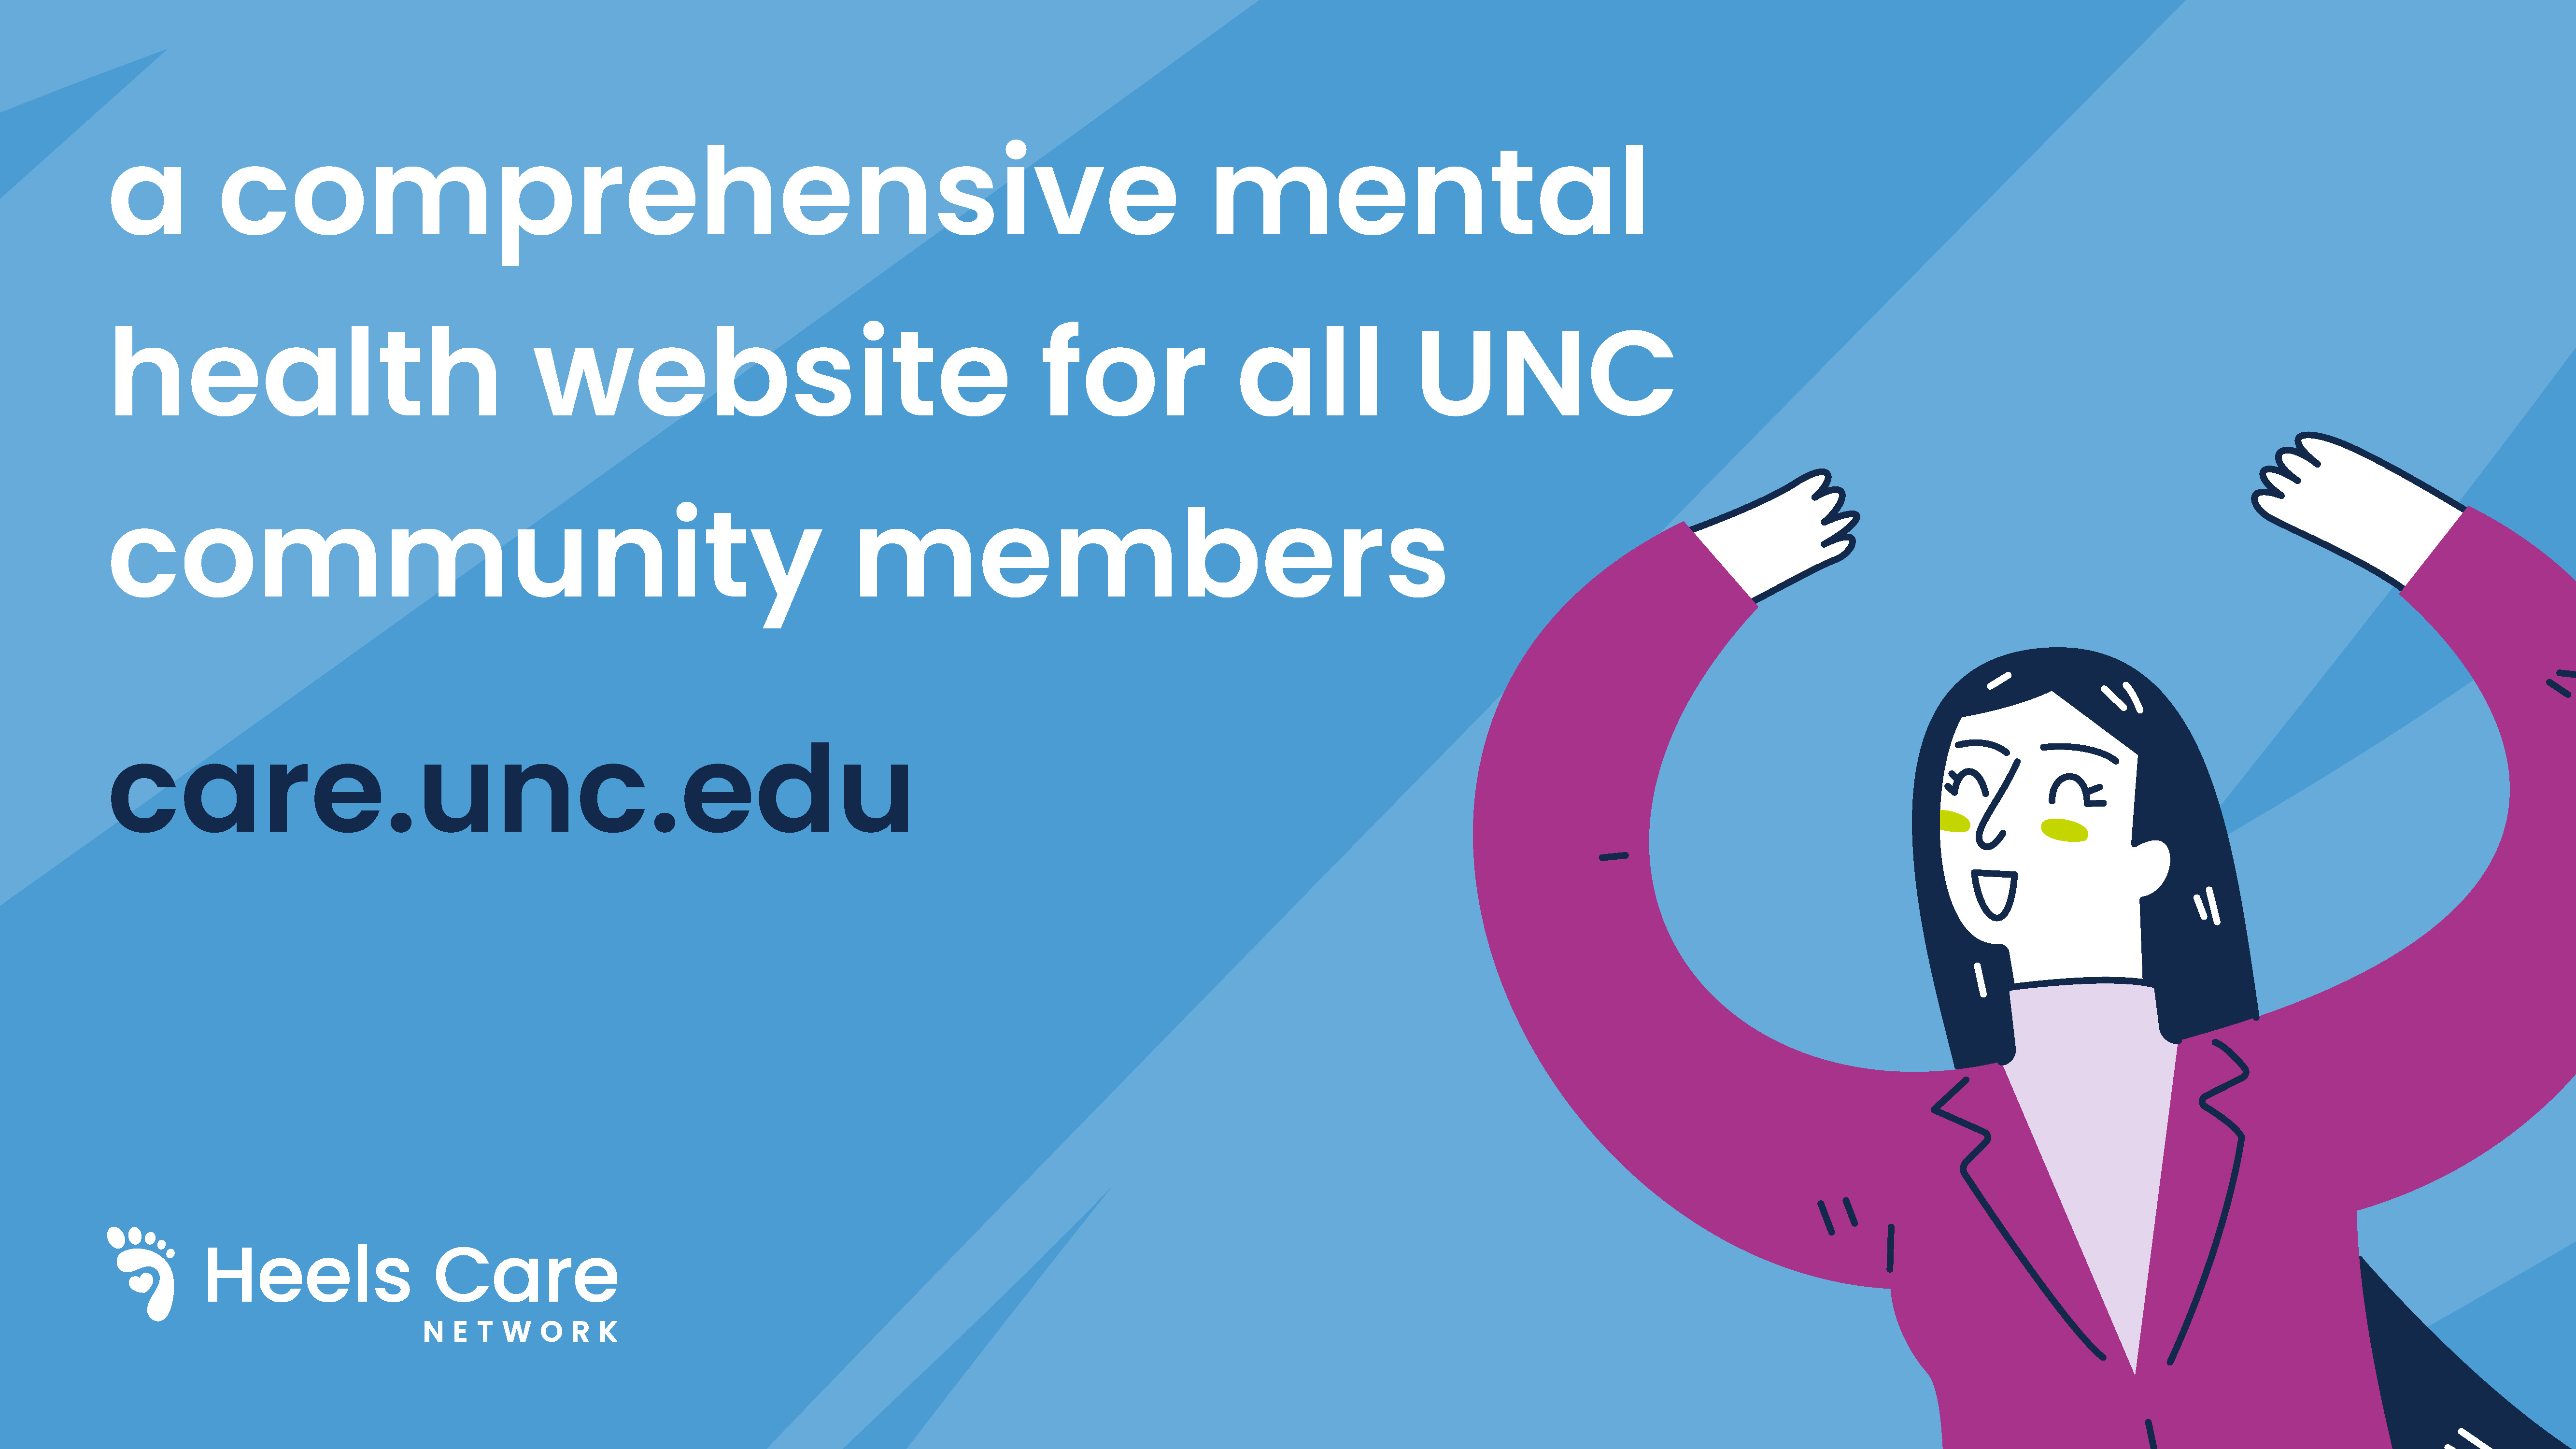 a comprehensive mental health website for all UNC community members care.unc.edu